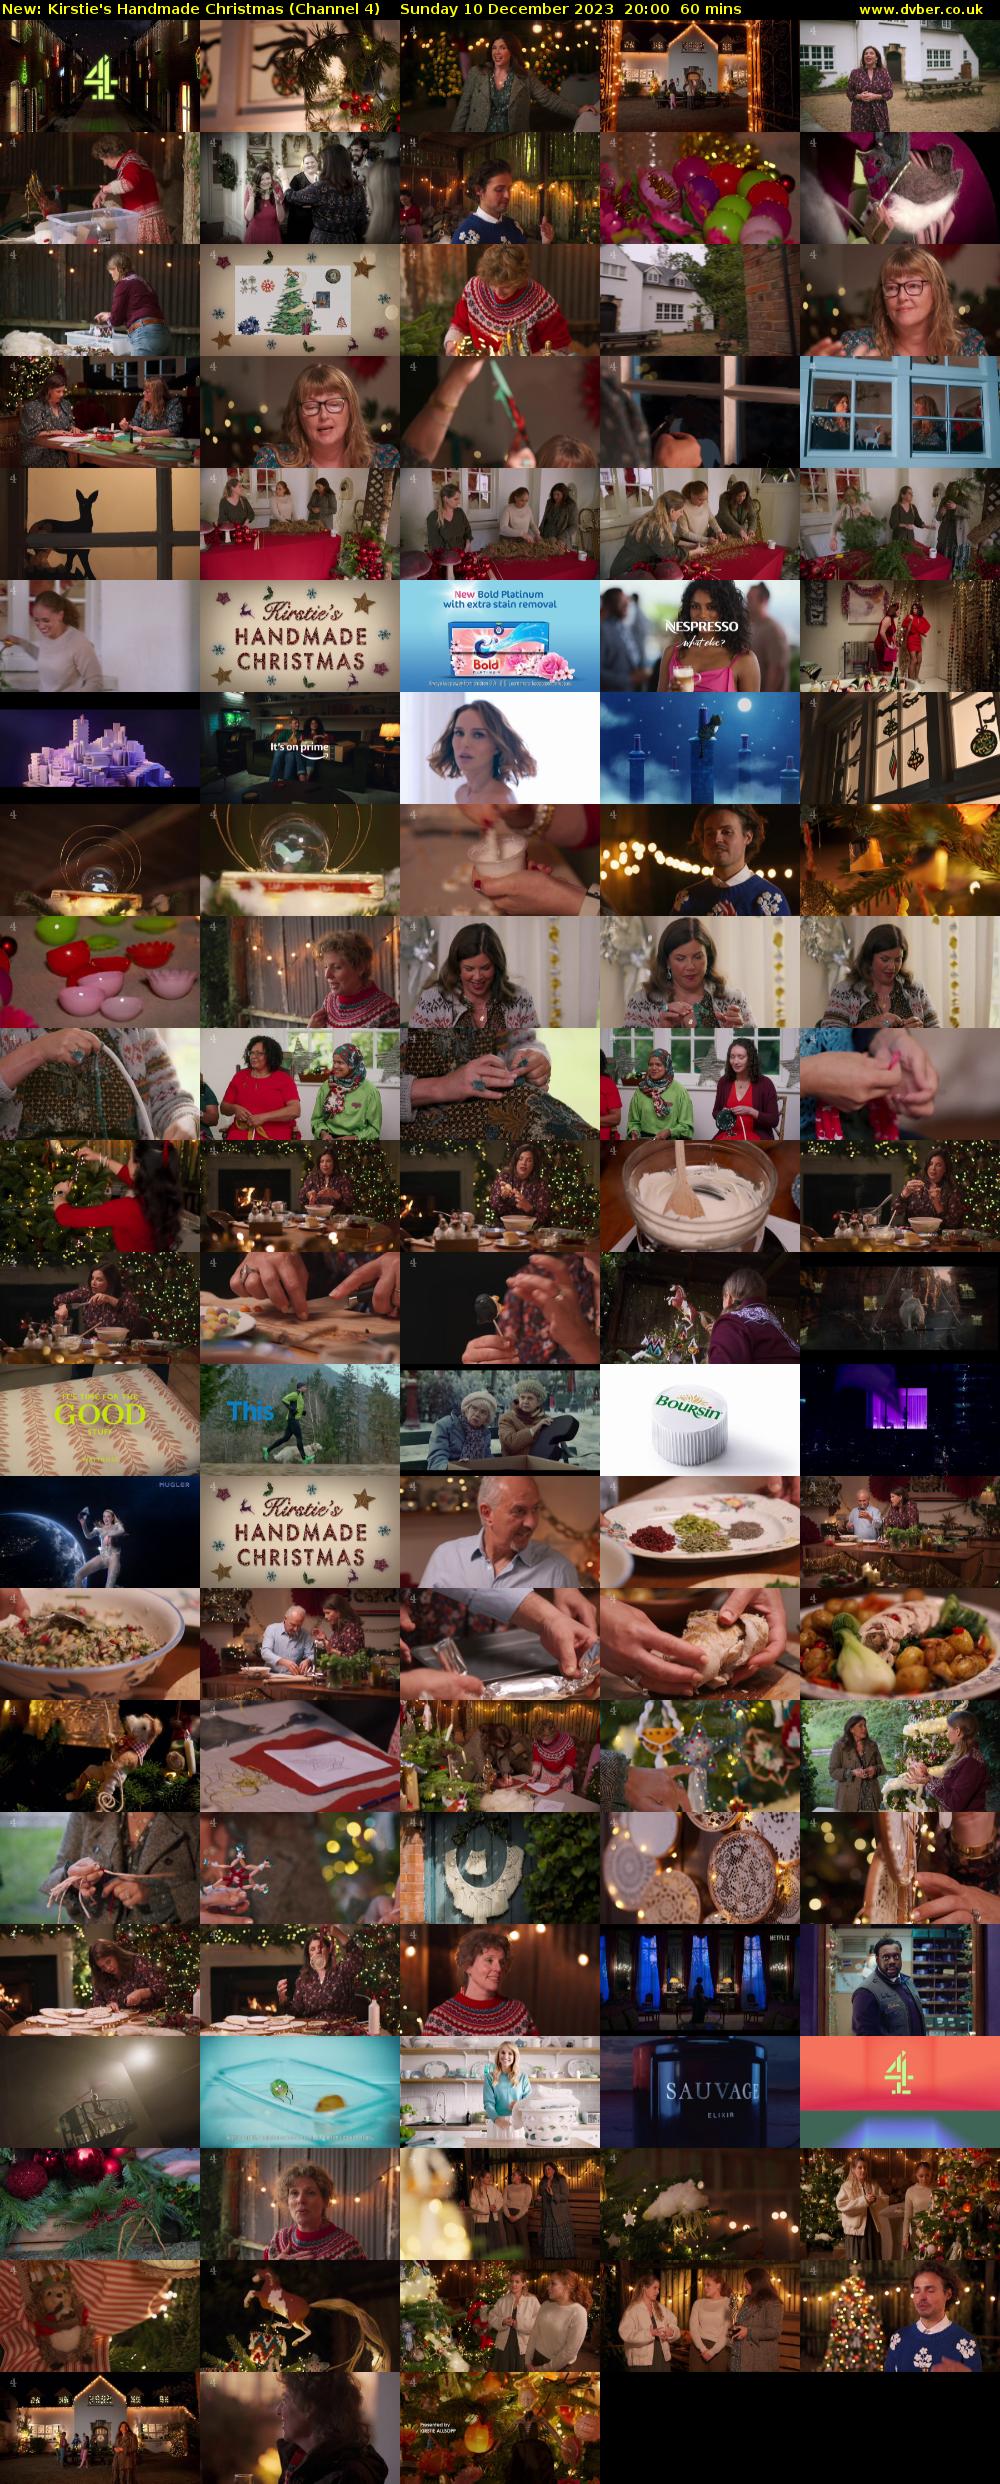 Kirstie's Handmade Christmas (Channel 4) Sunday 10 December 2023 20:00 - 21:00